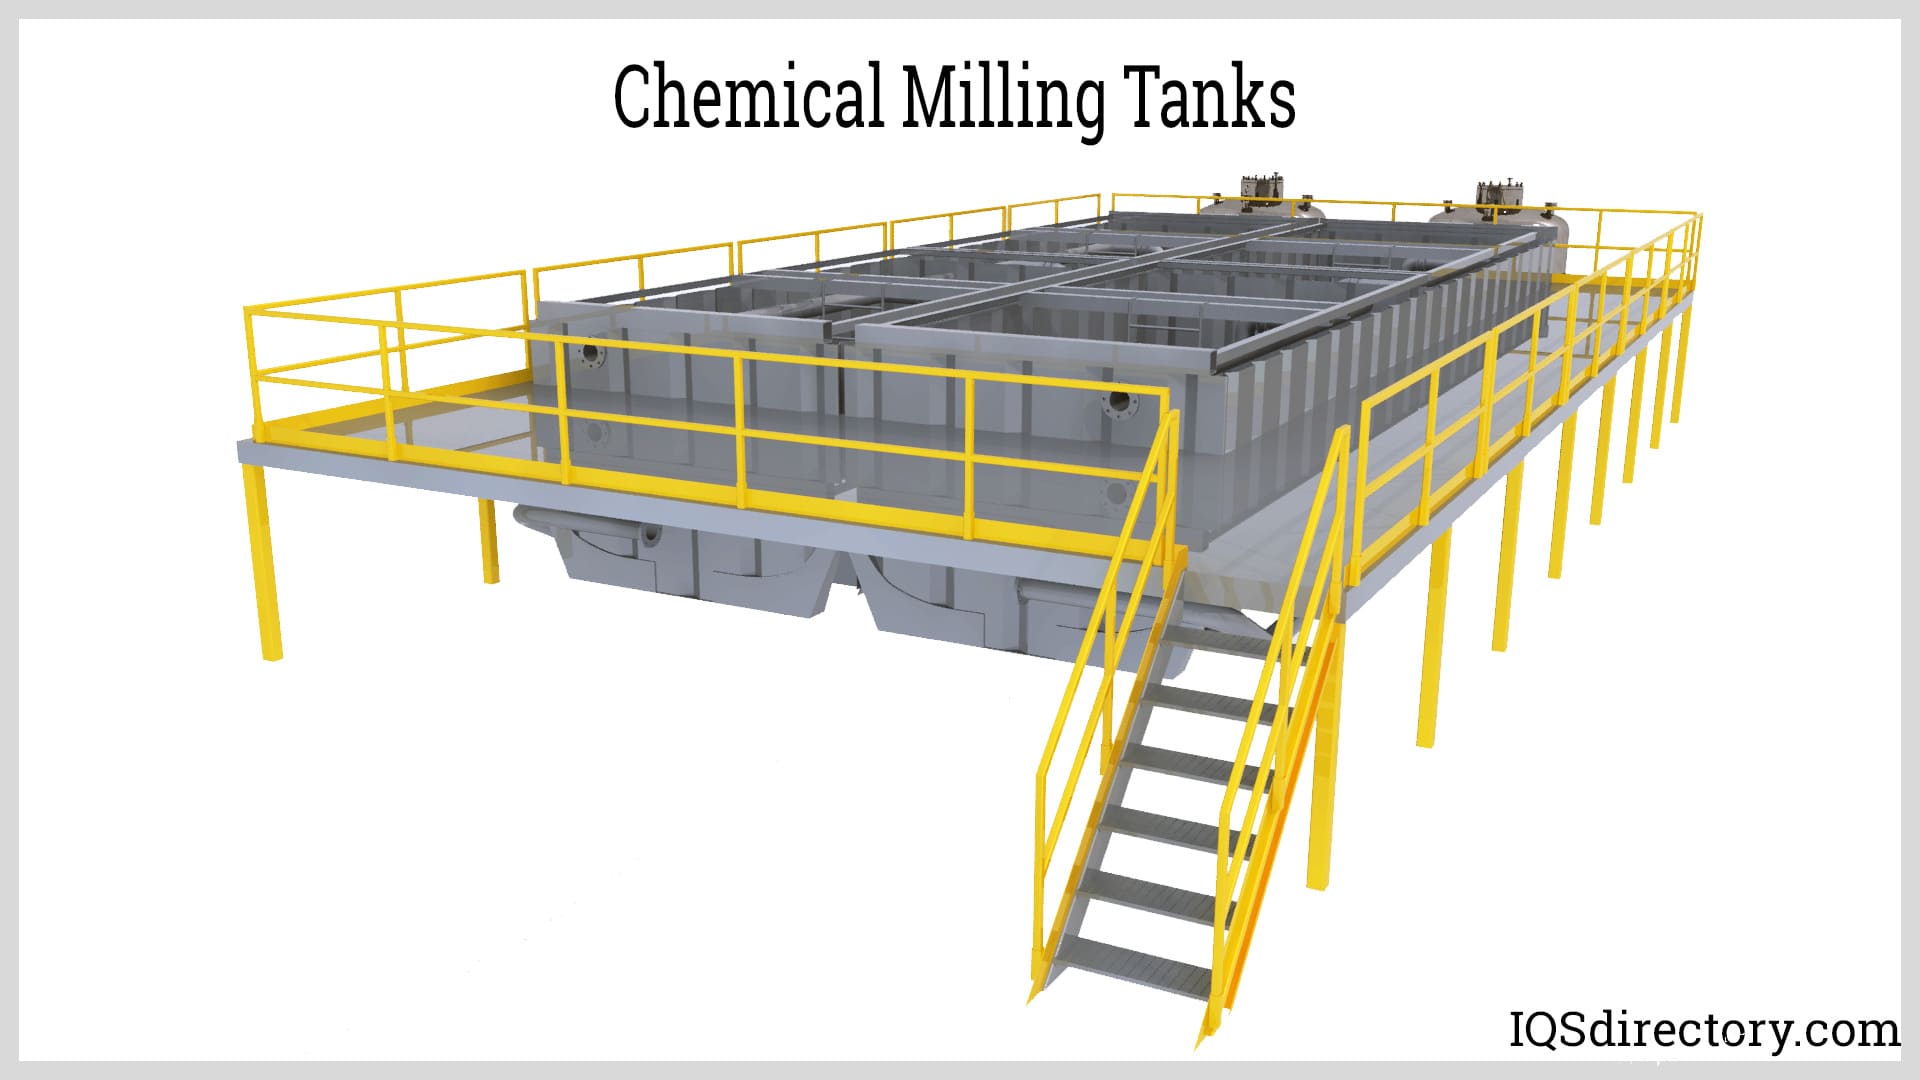 Chemical Milling Tanks